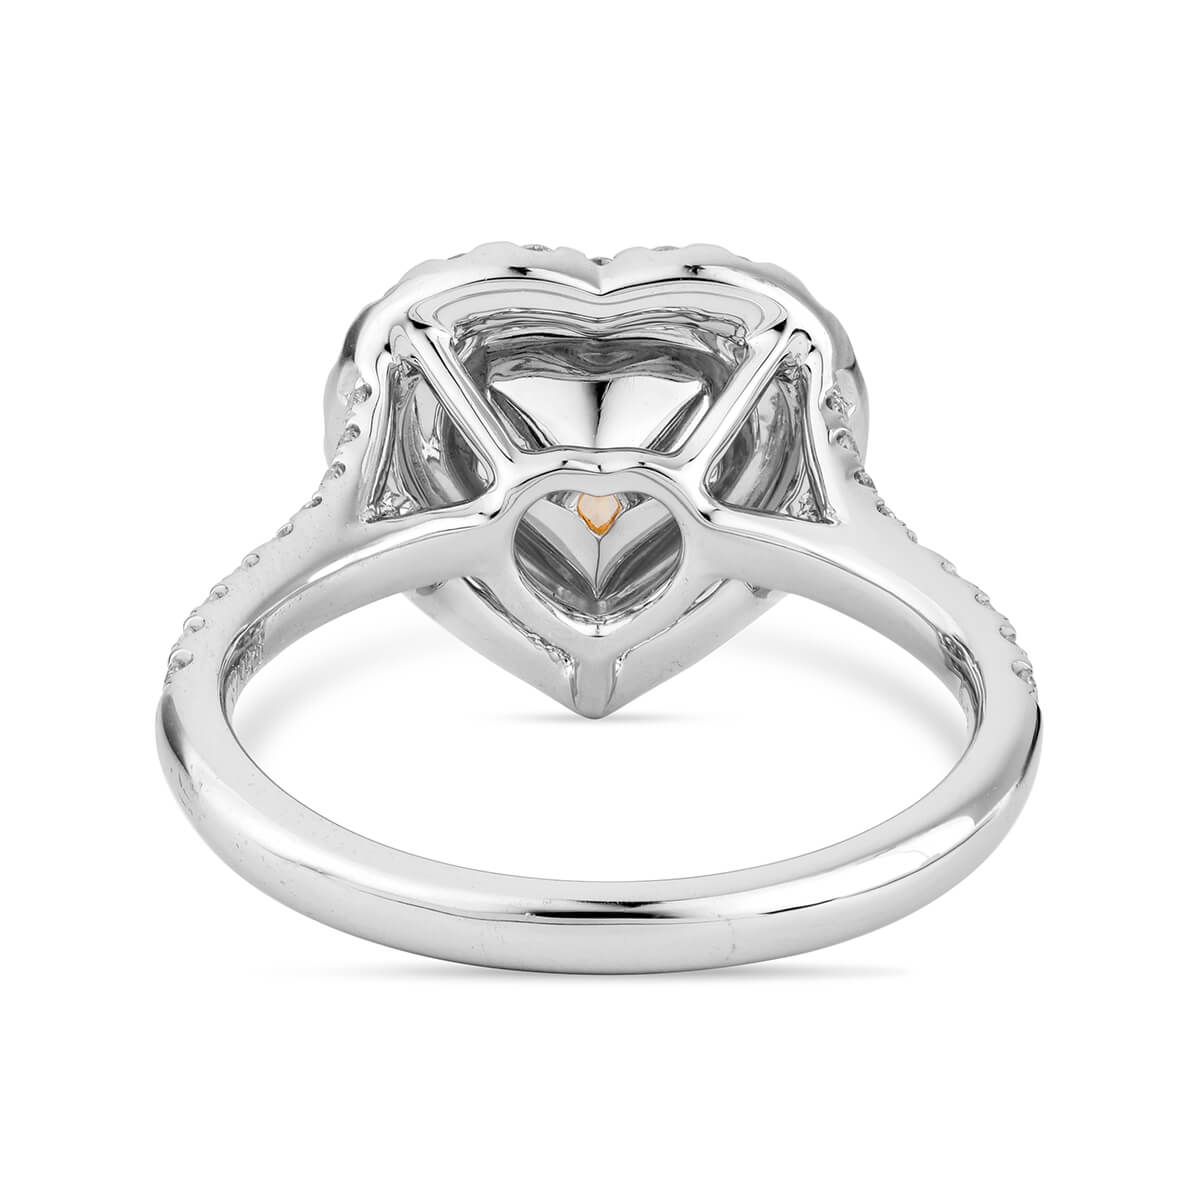 Fancy Intense Yellow Diamond Ring, 1.51 Ct. TW, Heart shape, GIA Certified, 5191146828